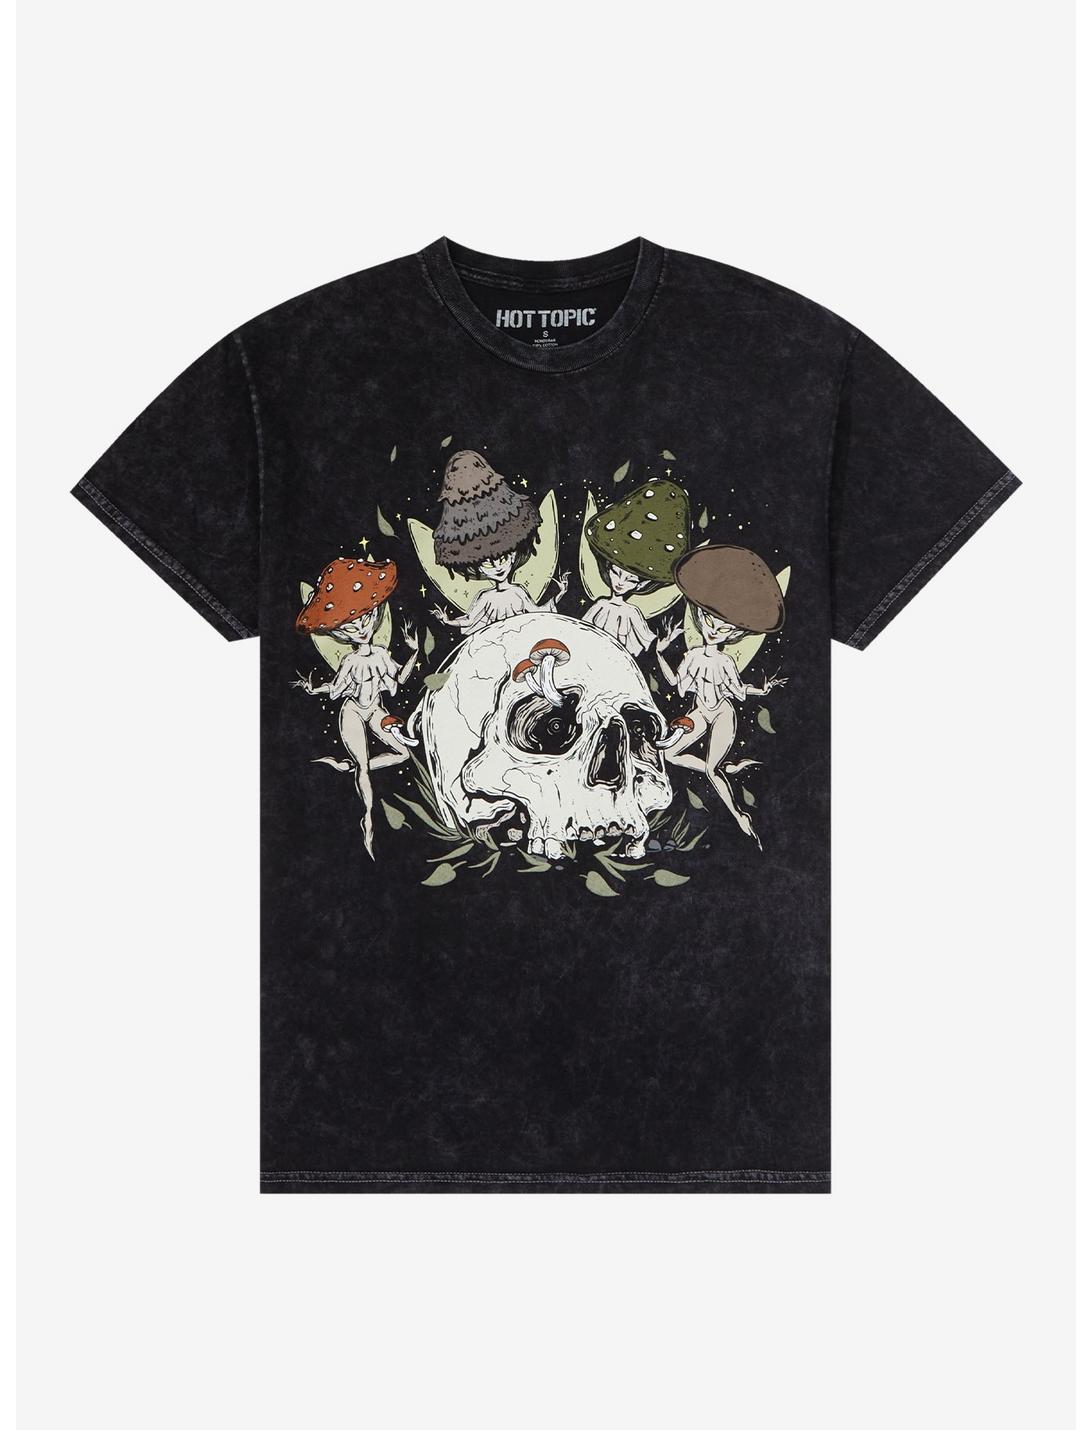 Fairy Skull Wash Boyfriend Fit Girls T-Shirt, MULTI, hi-res